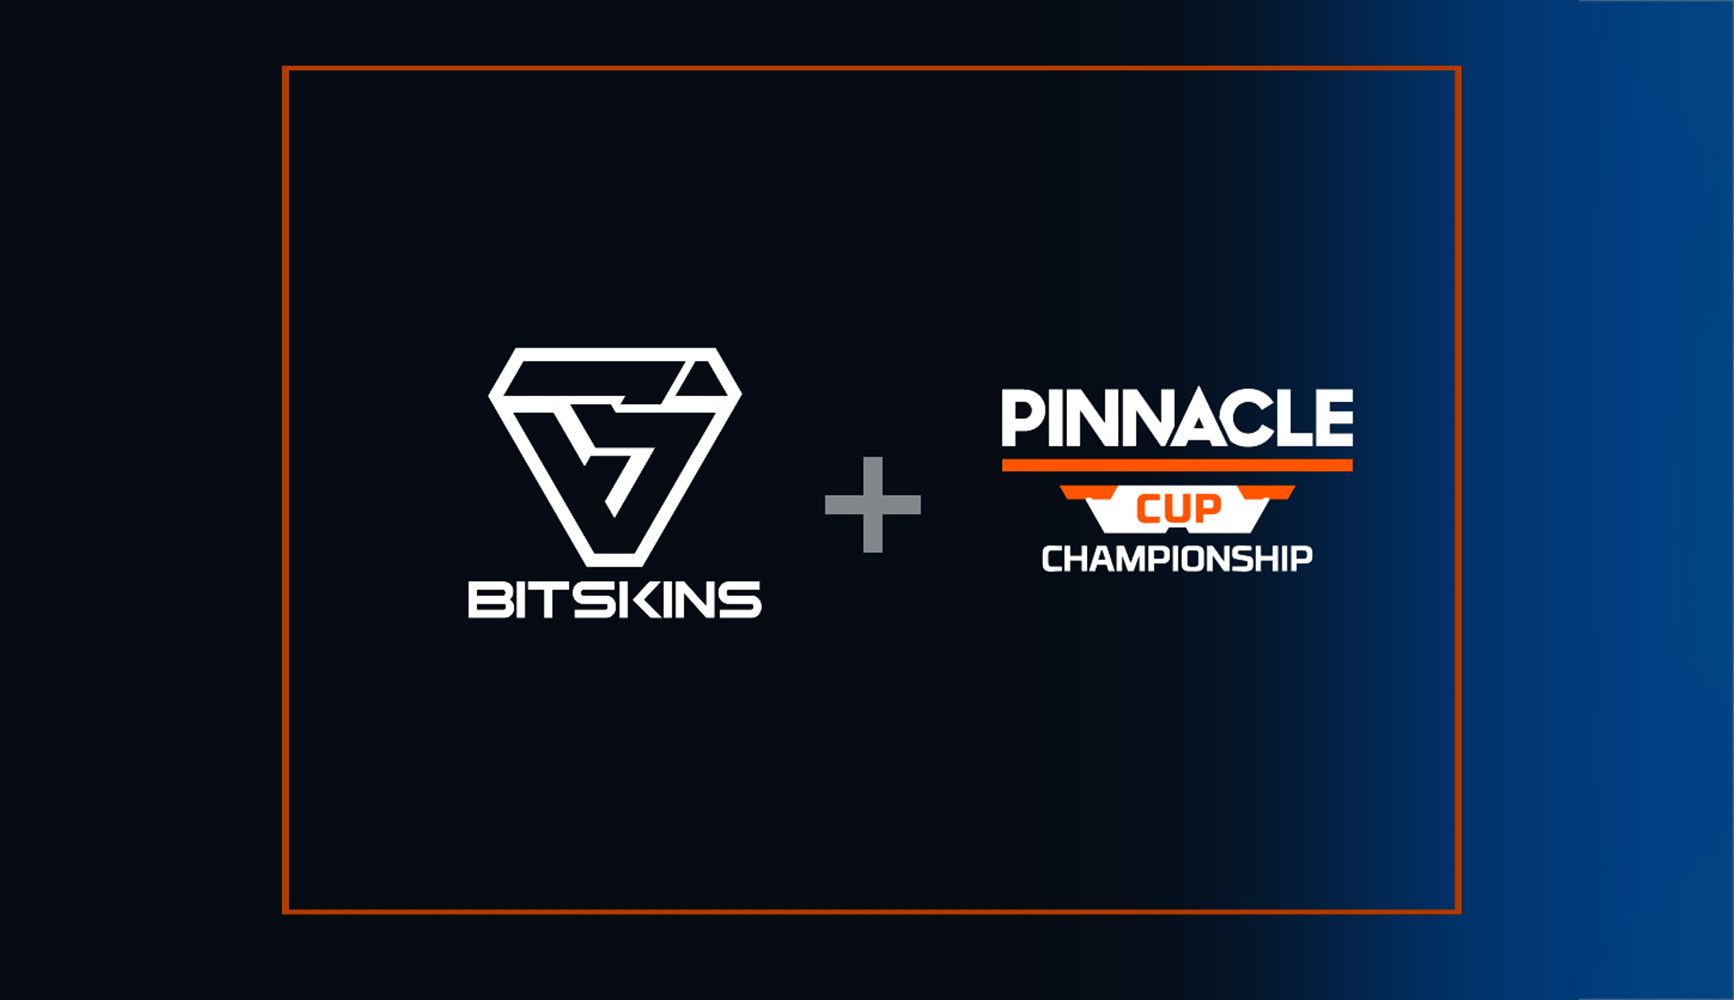 BitSkins to sponsor Pinnacle Cup Championship in Sweden, Lund